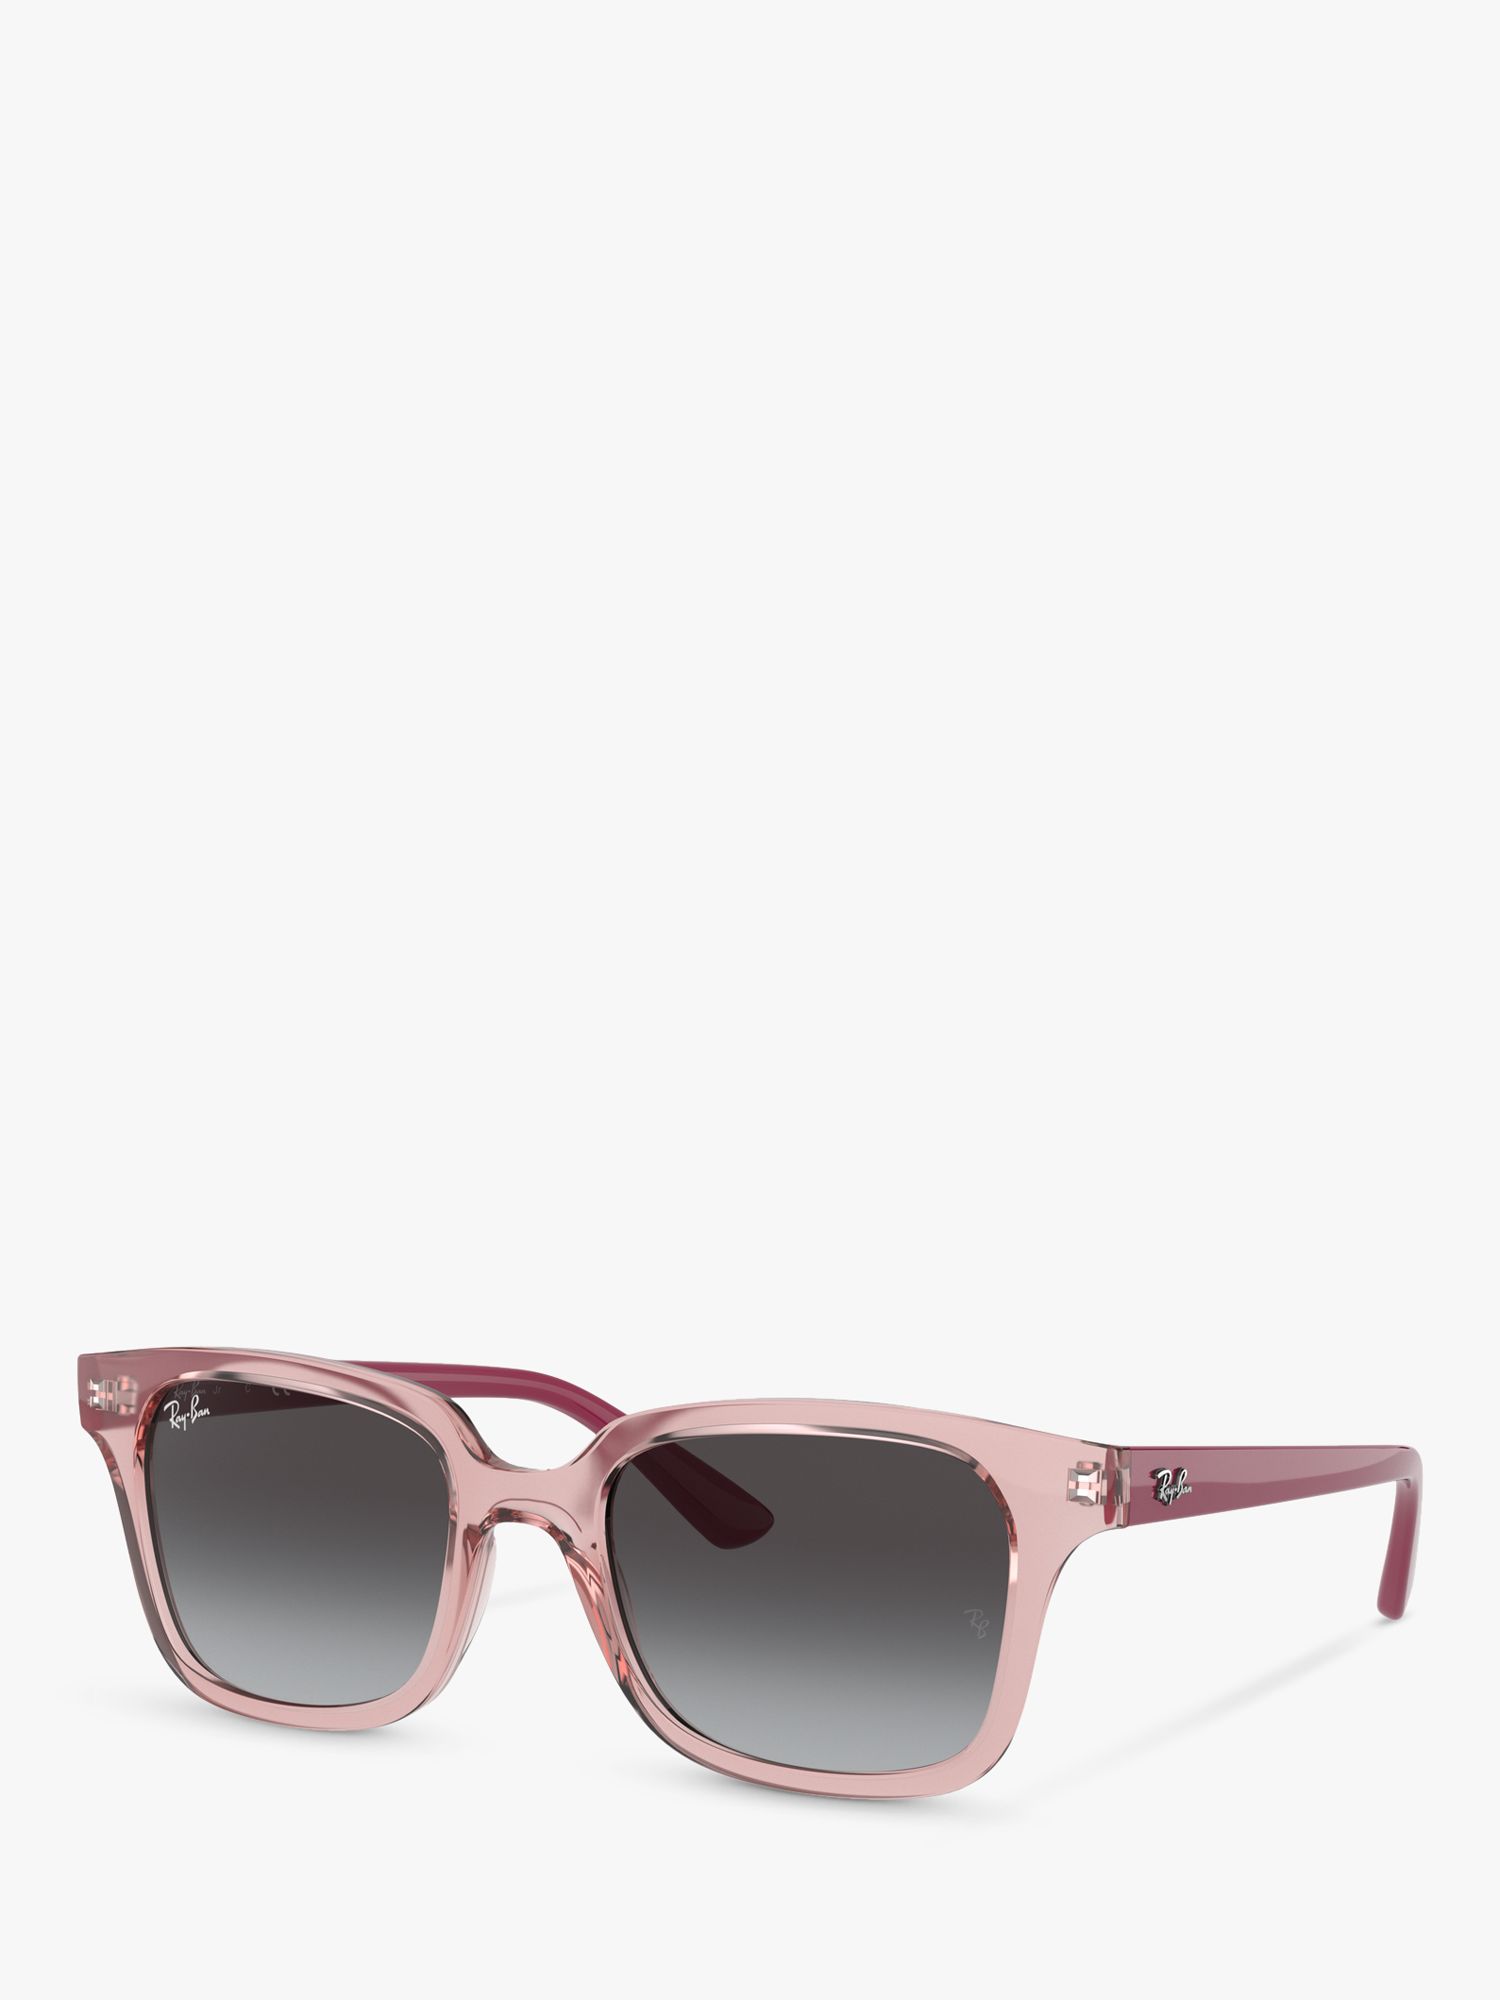 Ray-Ban Junior RJ9071S Unisex Square Sunglasses, Transparent Pink/Grey  Gradient at John Lewis & Partners